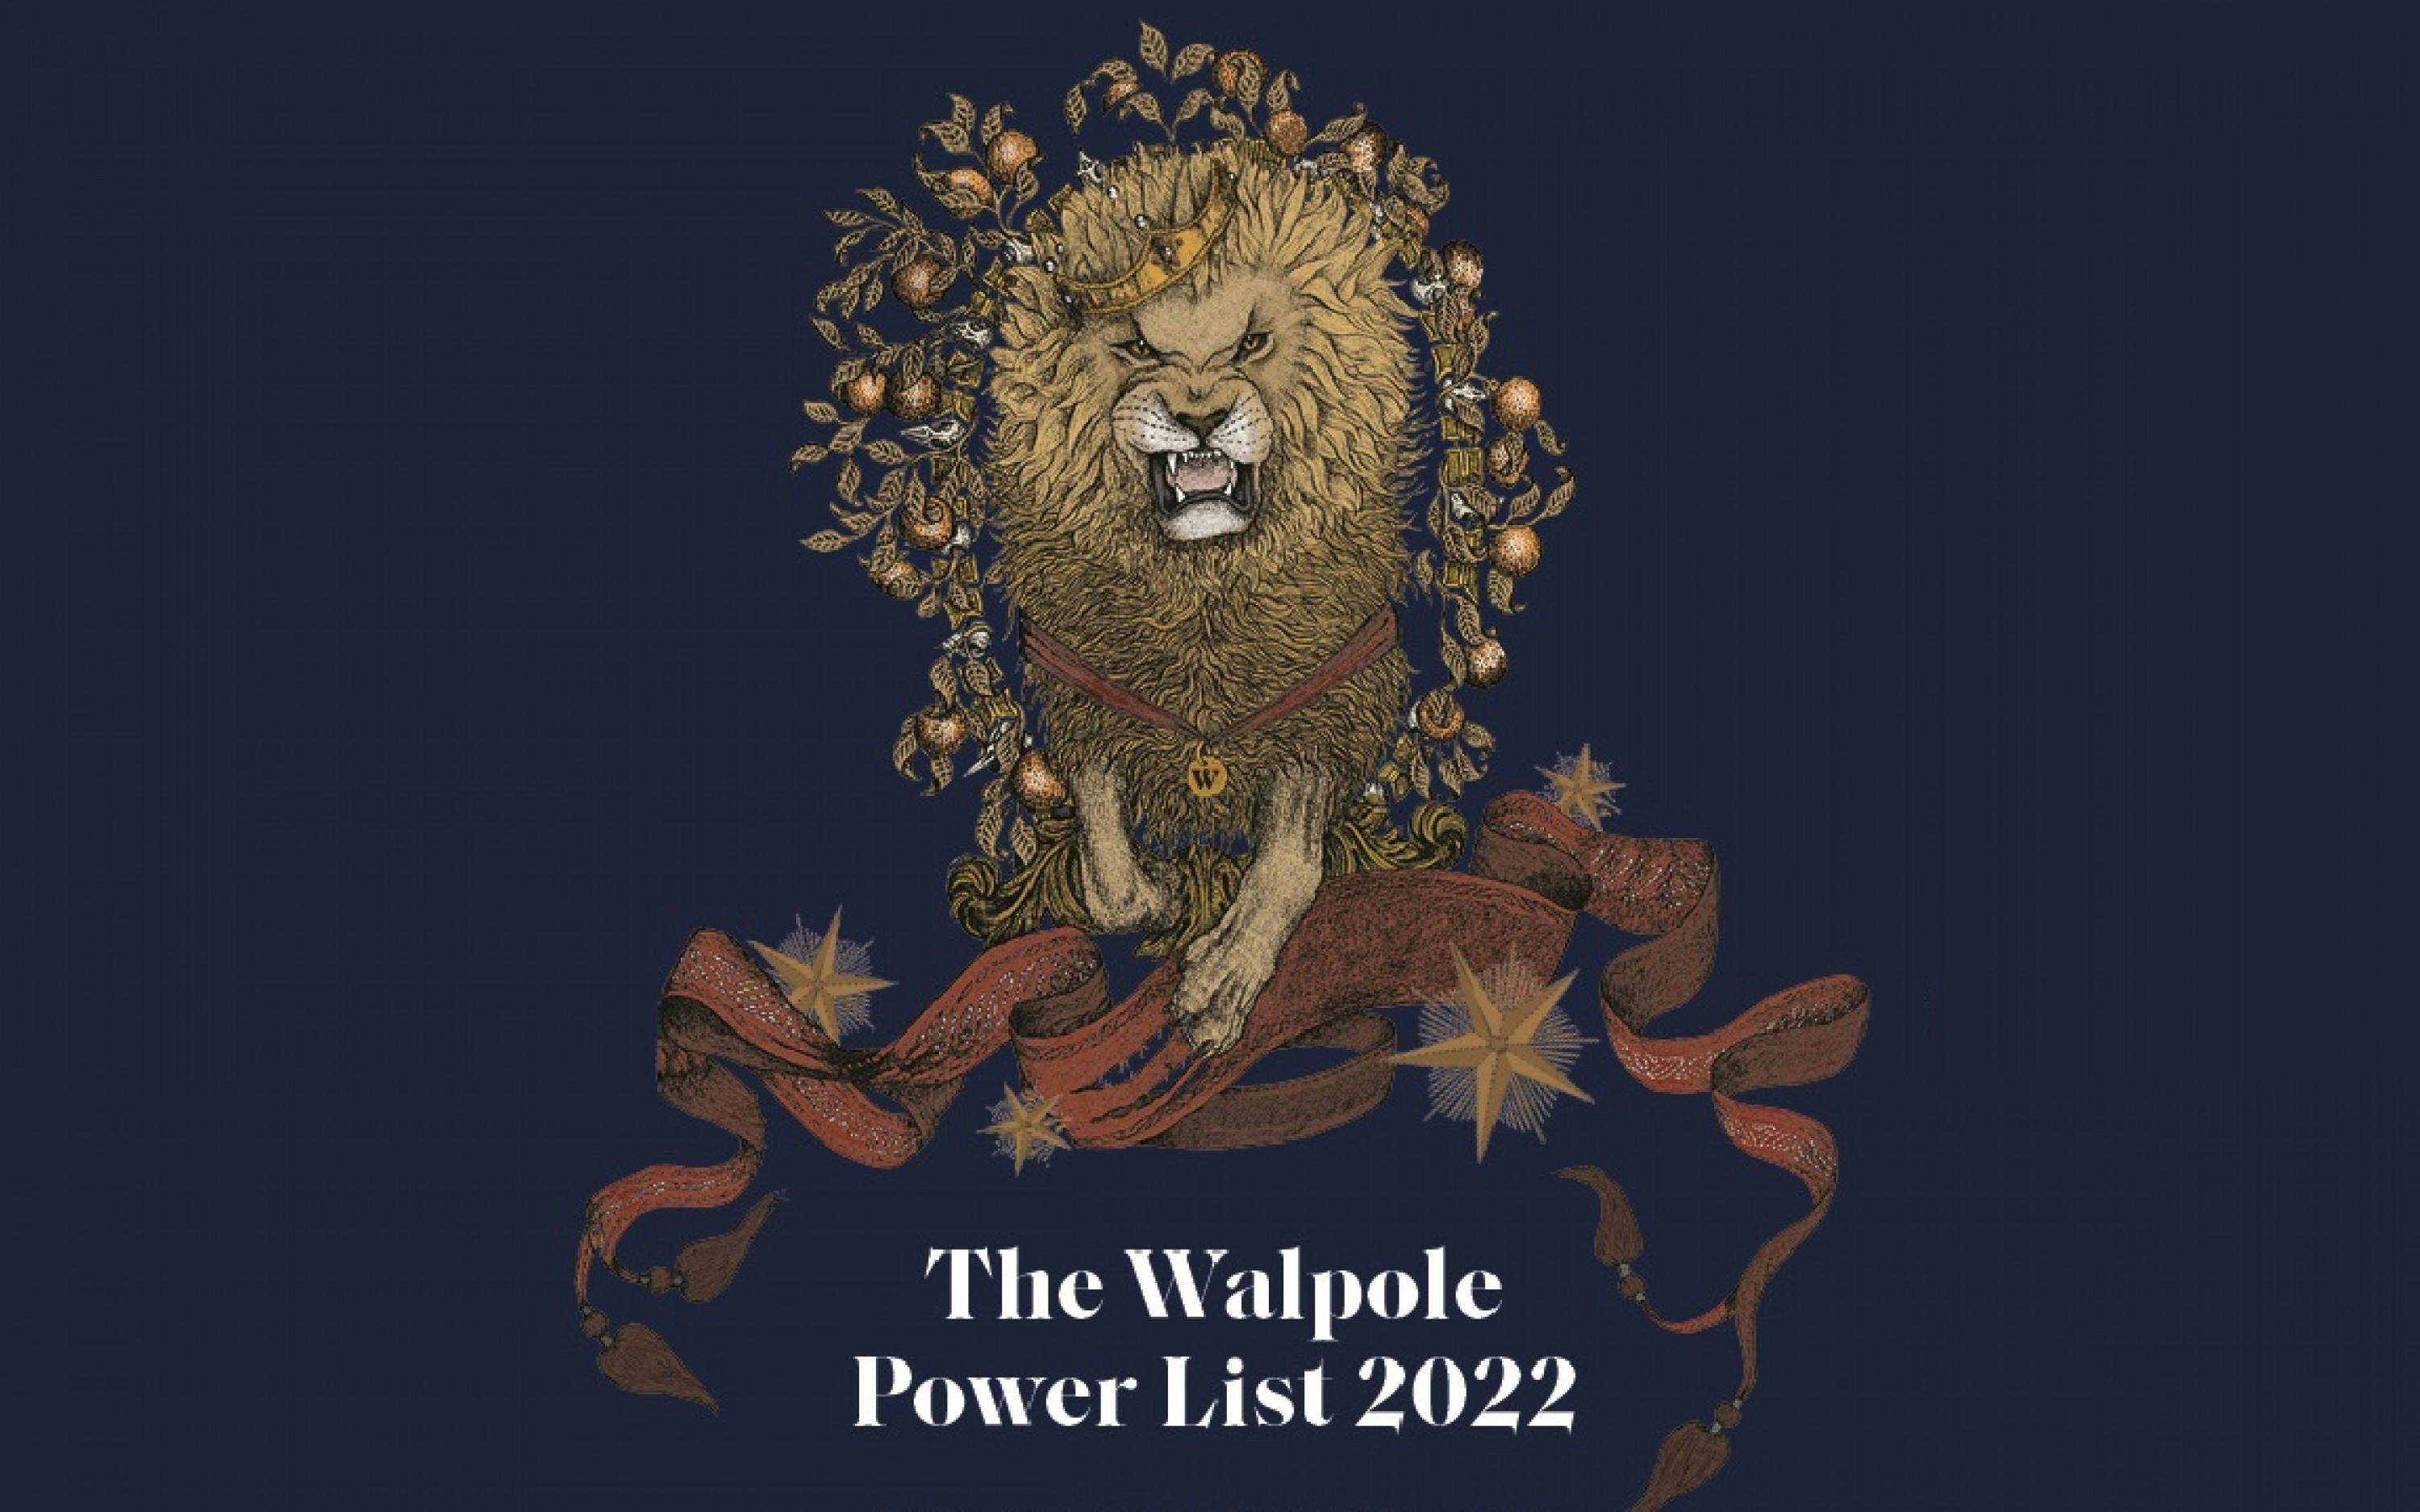 The Walpole Power List 2022